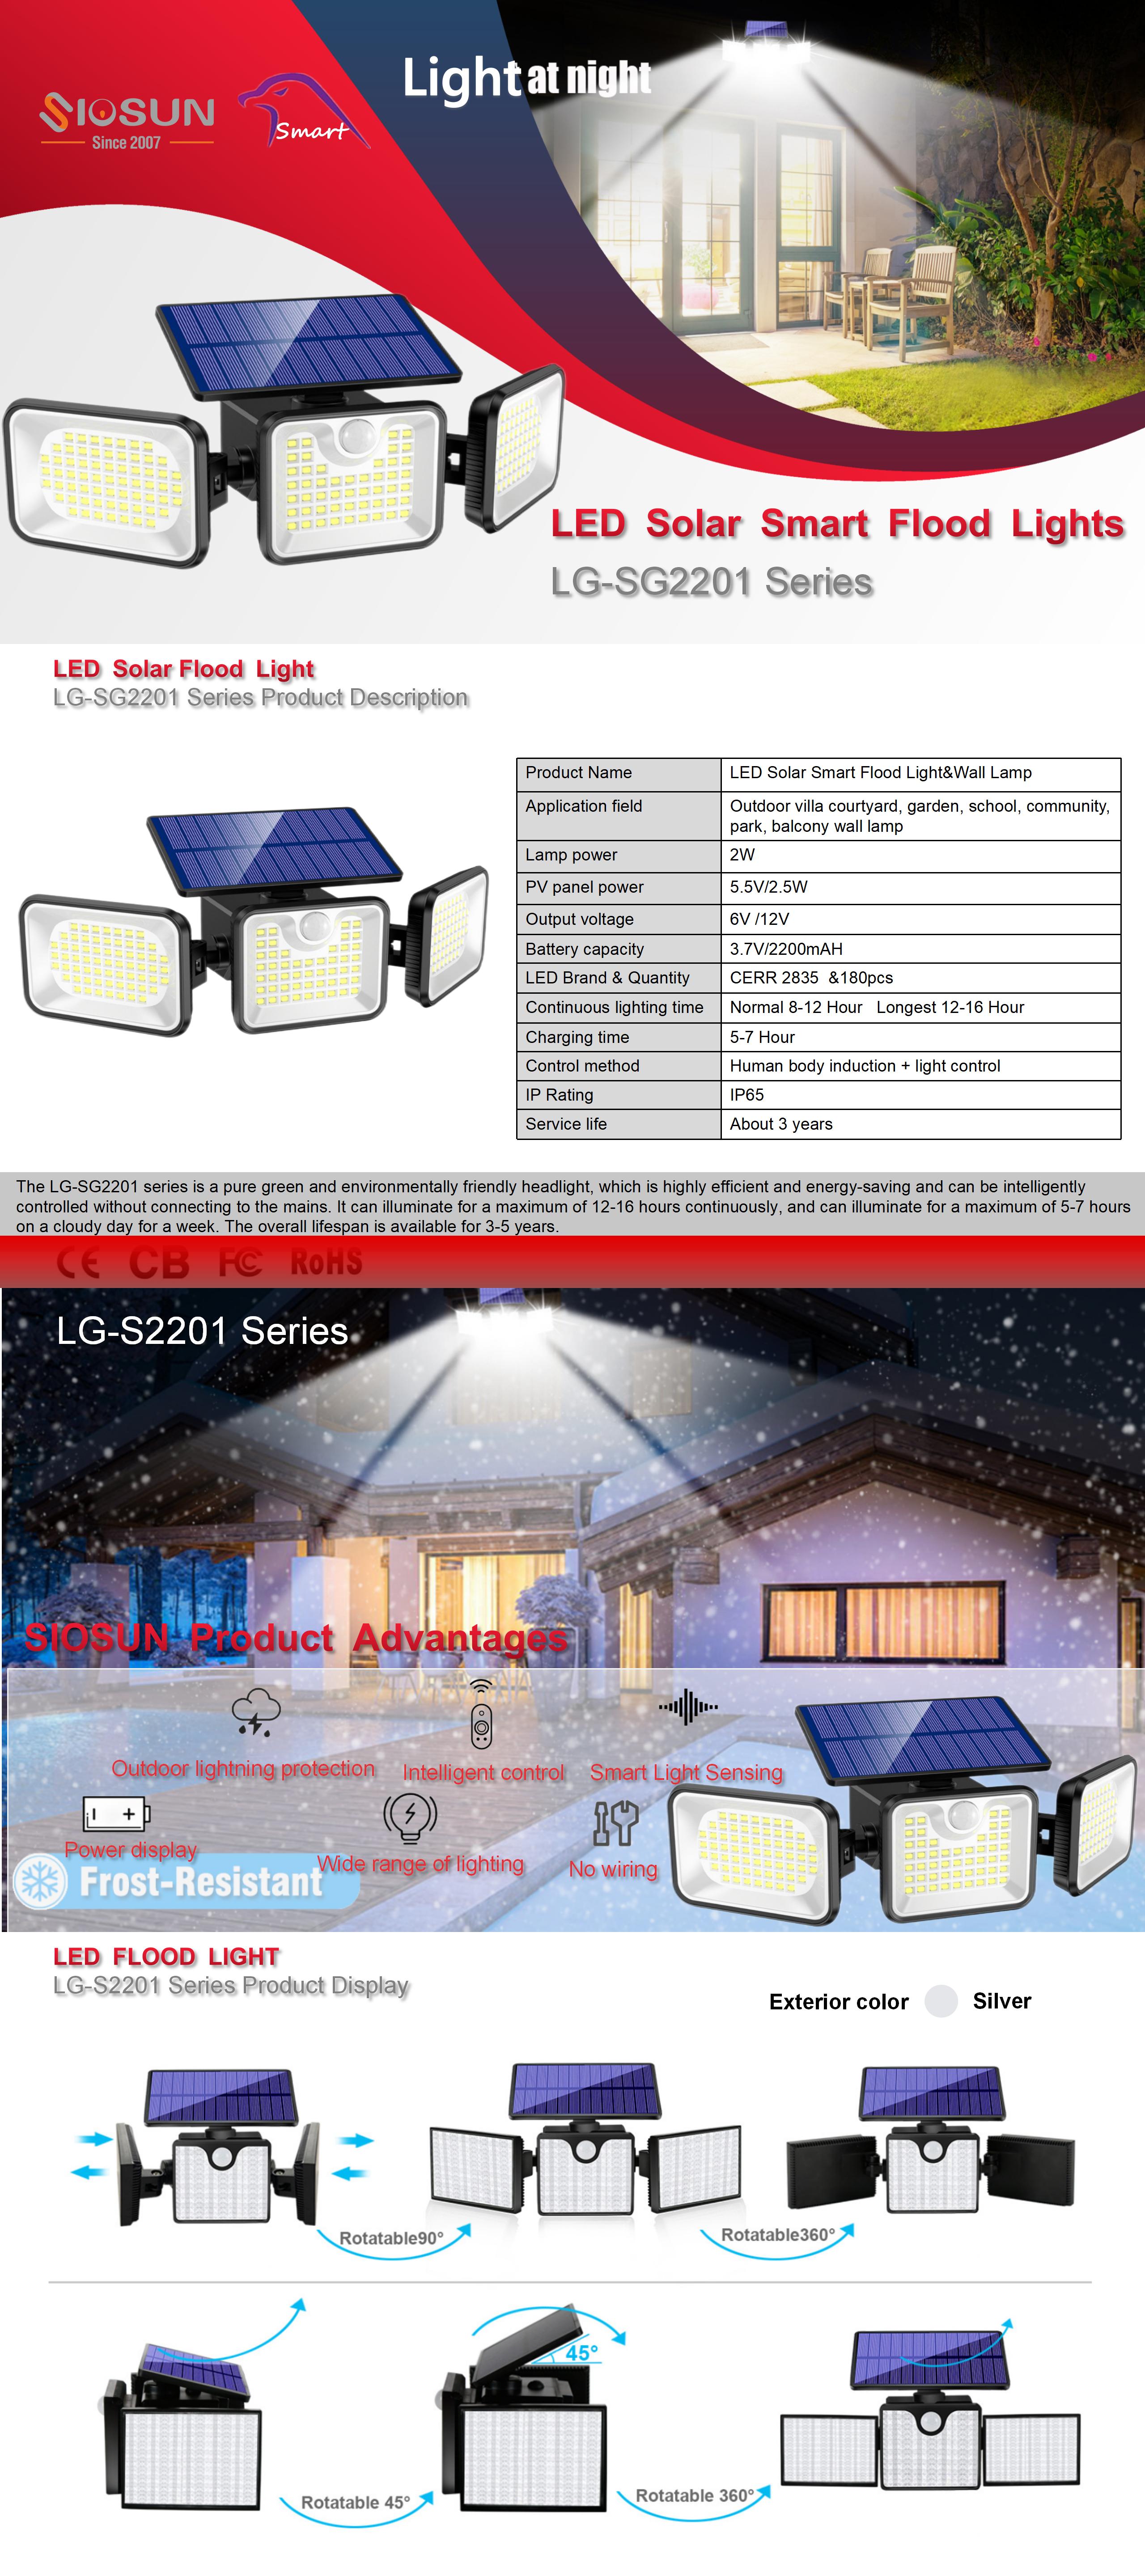 LED Solar Smart Flood Light&Wall Lamp